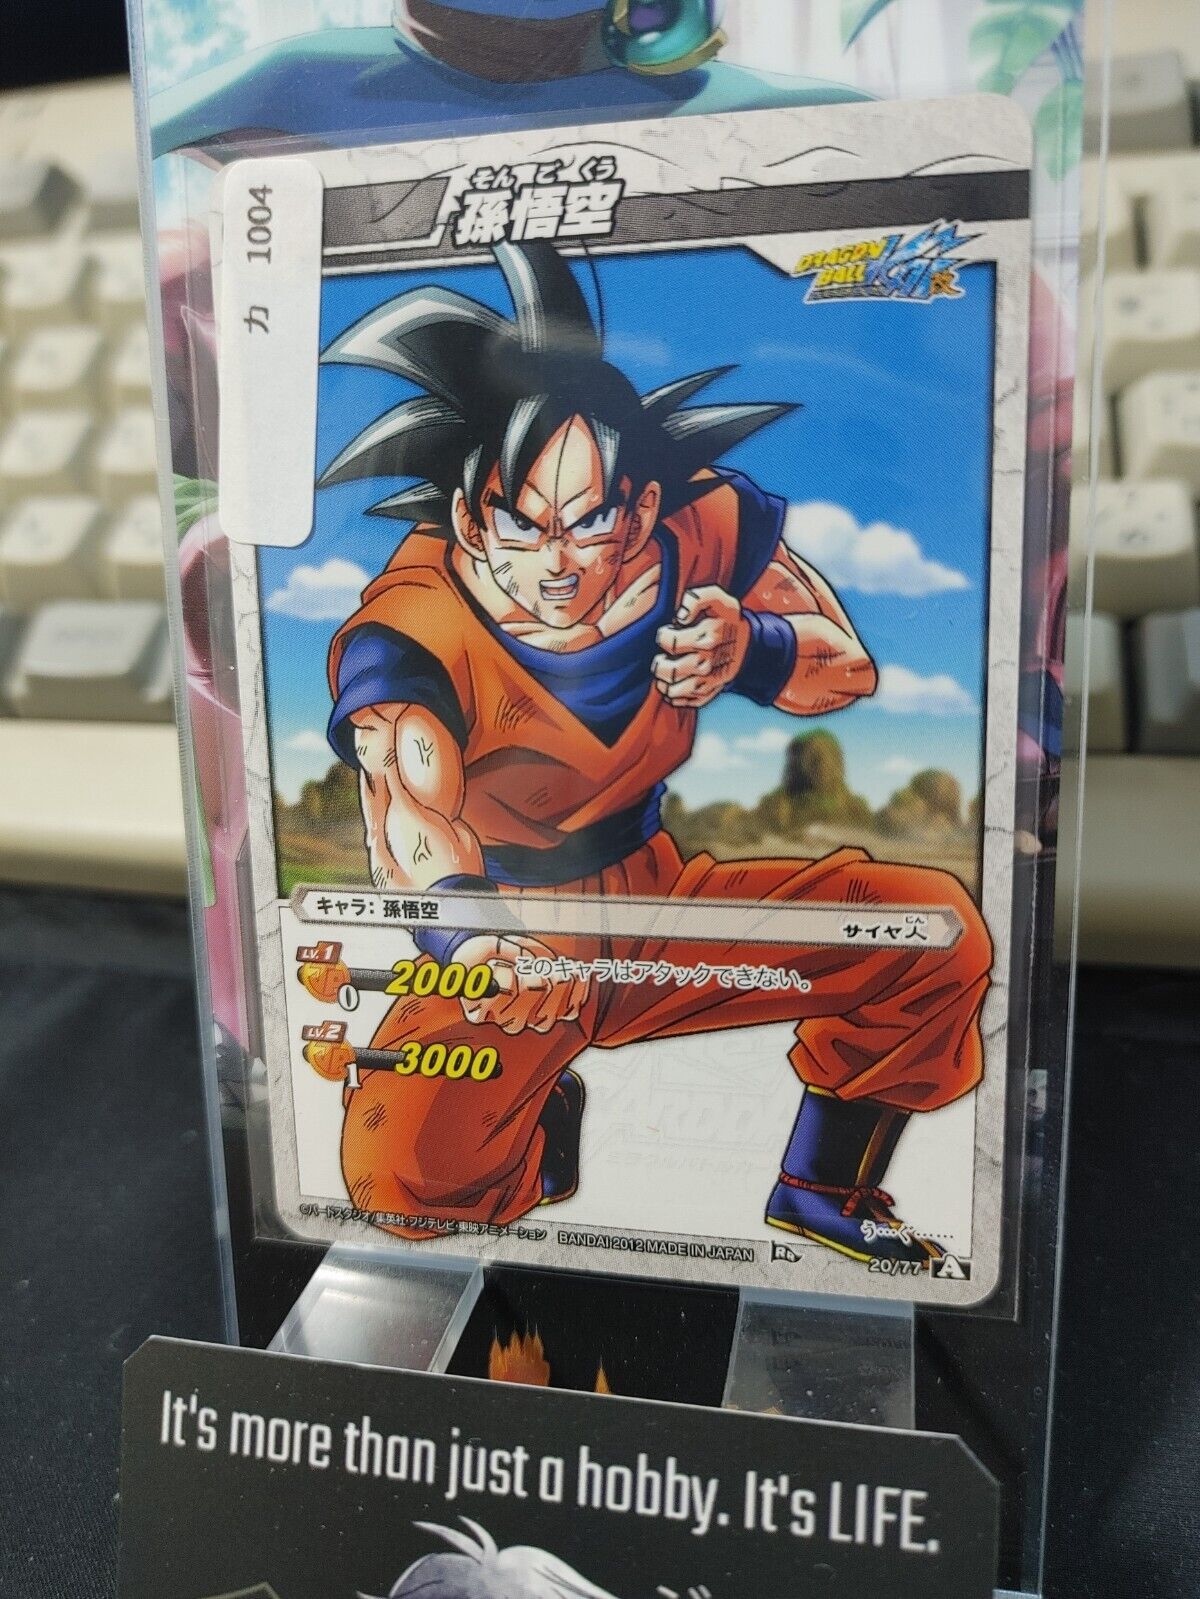 Dragon Ball Z Bandai Carddass Miracle Battle Goku 20/77 Japanese Retro